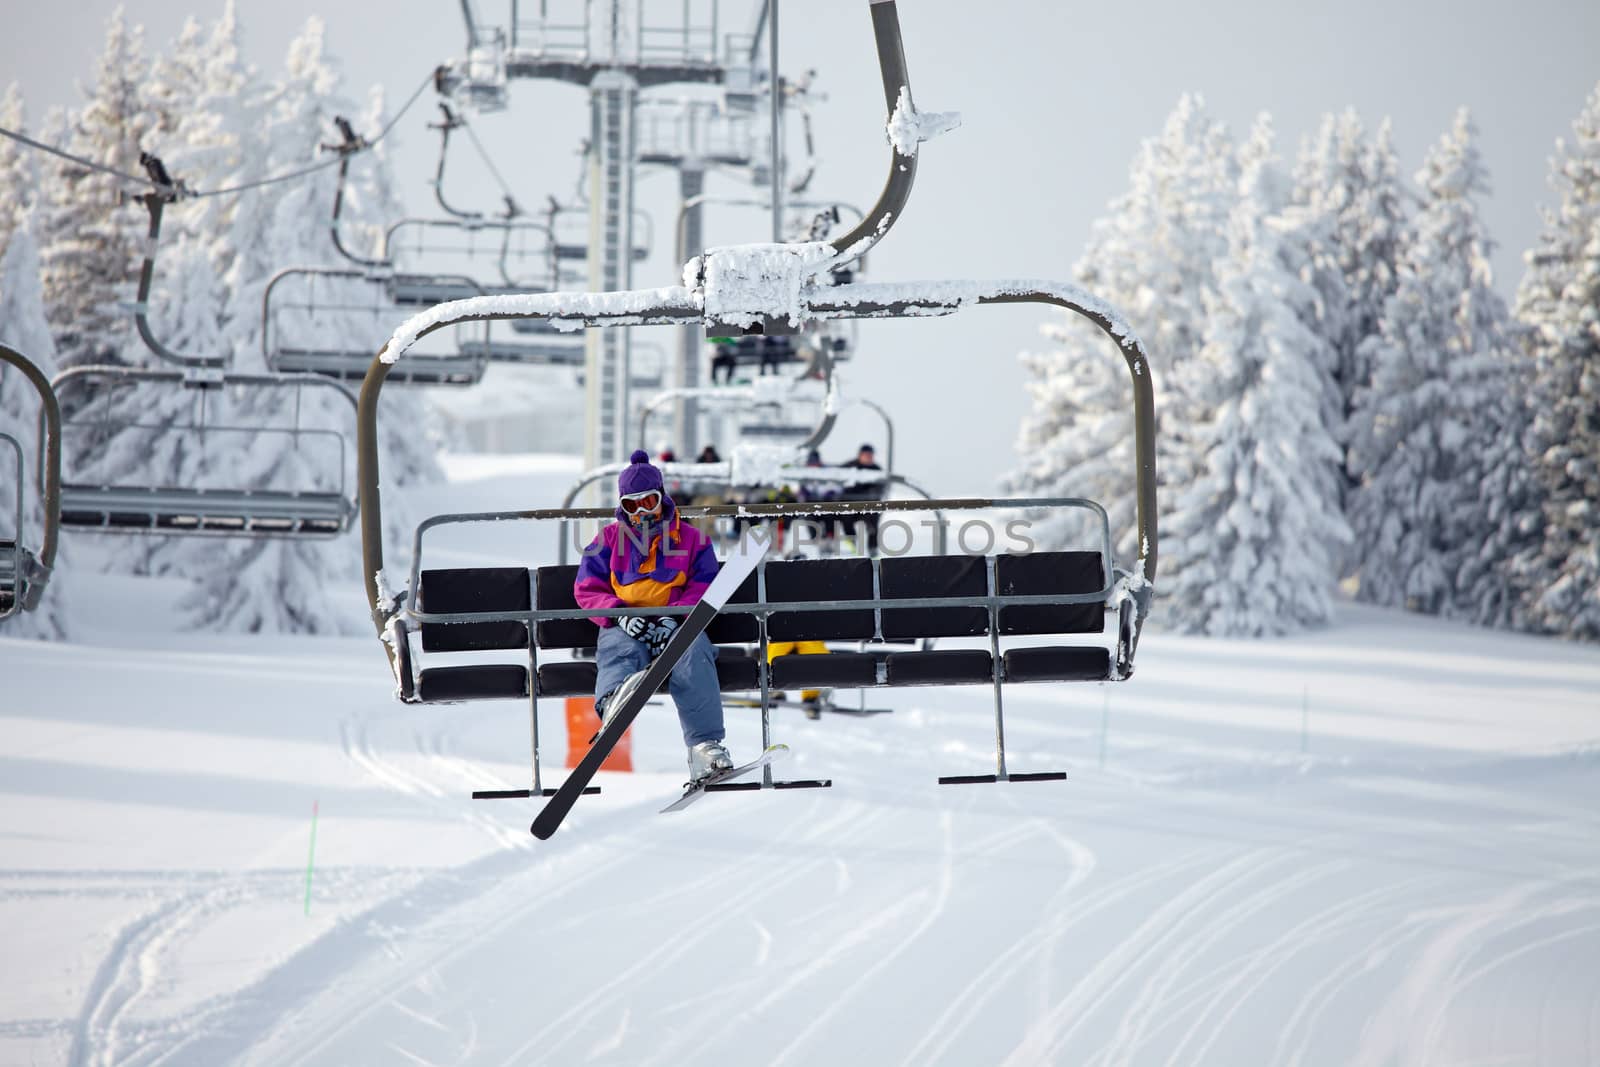 Ski lift by Gudella